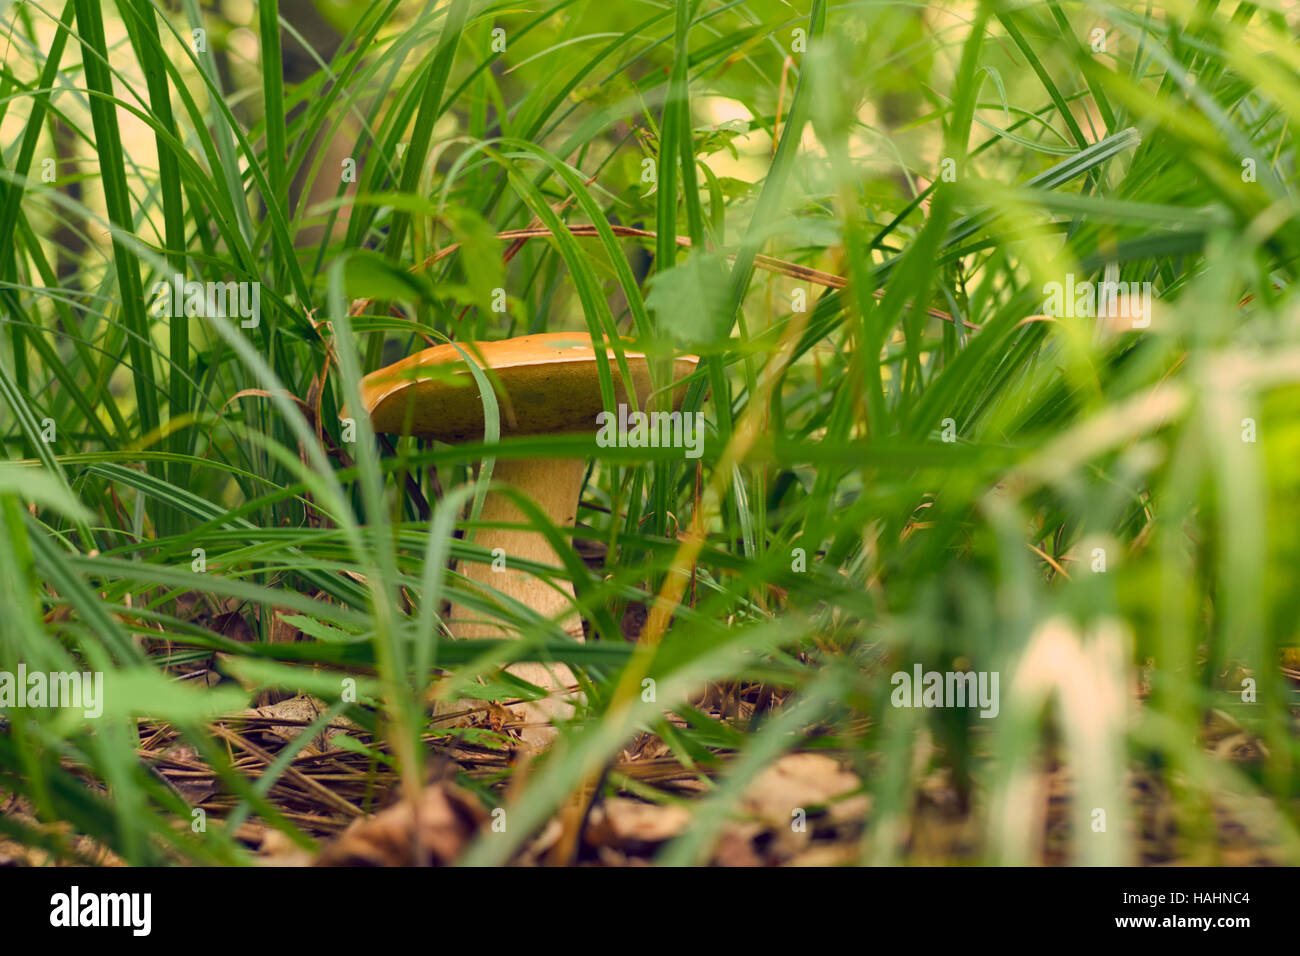 White mushroom in the green grass Stock Photo